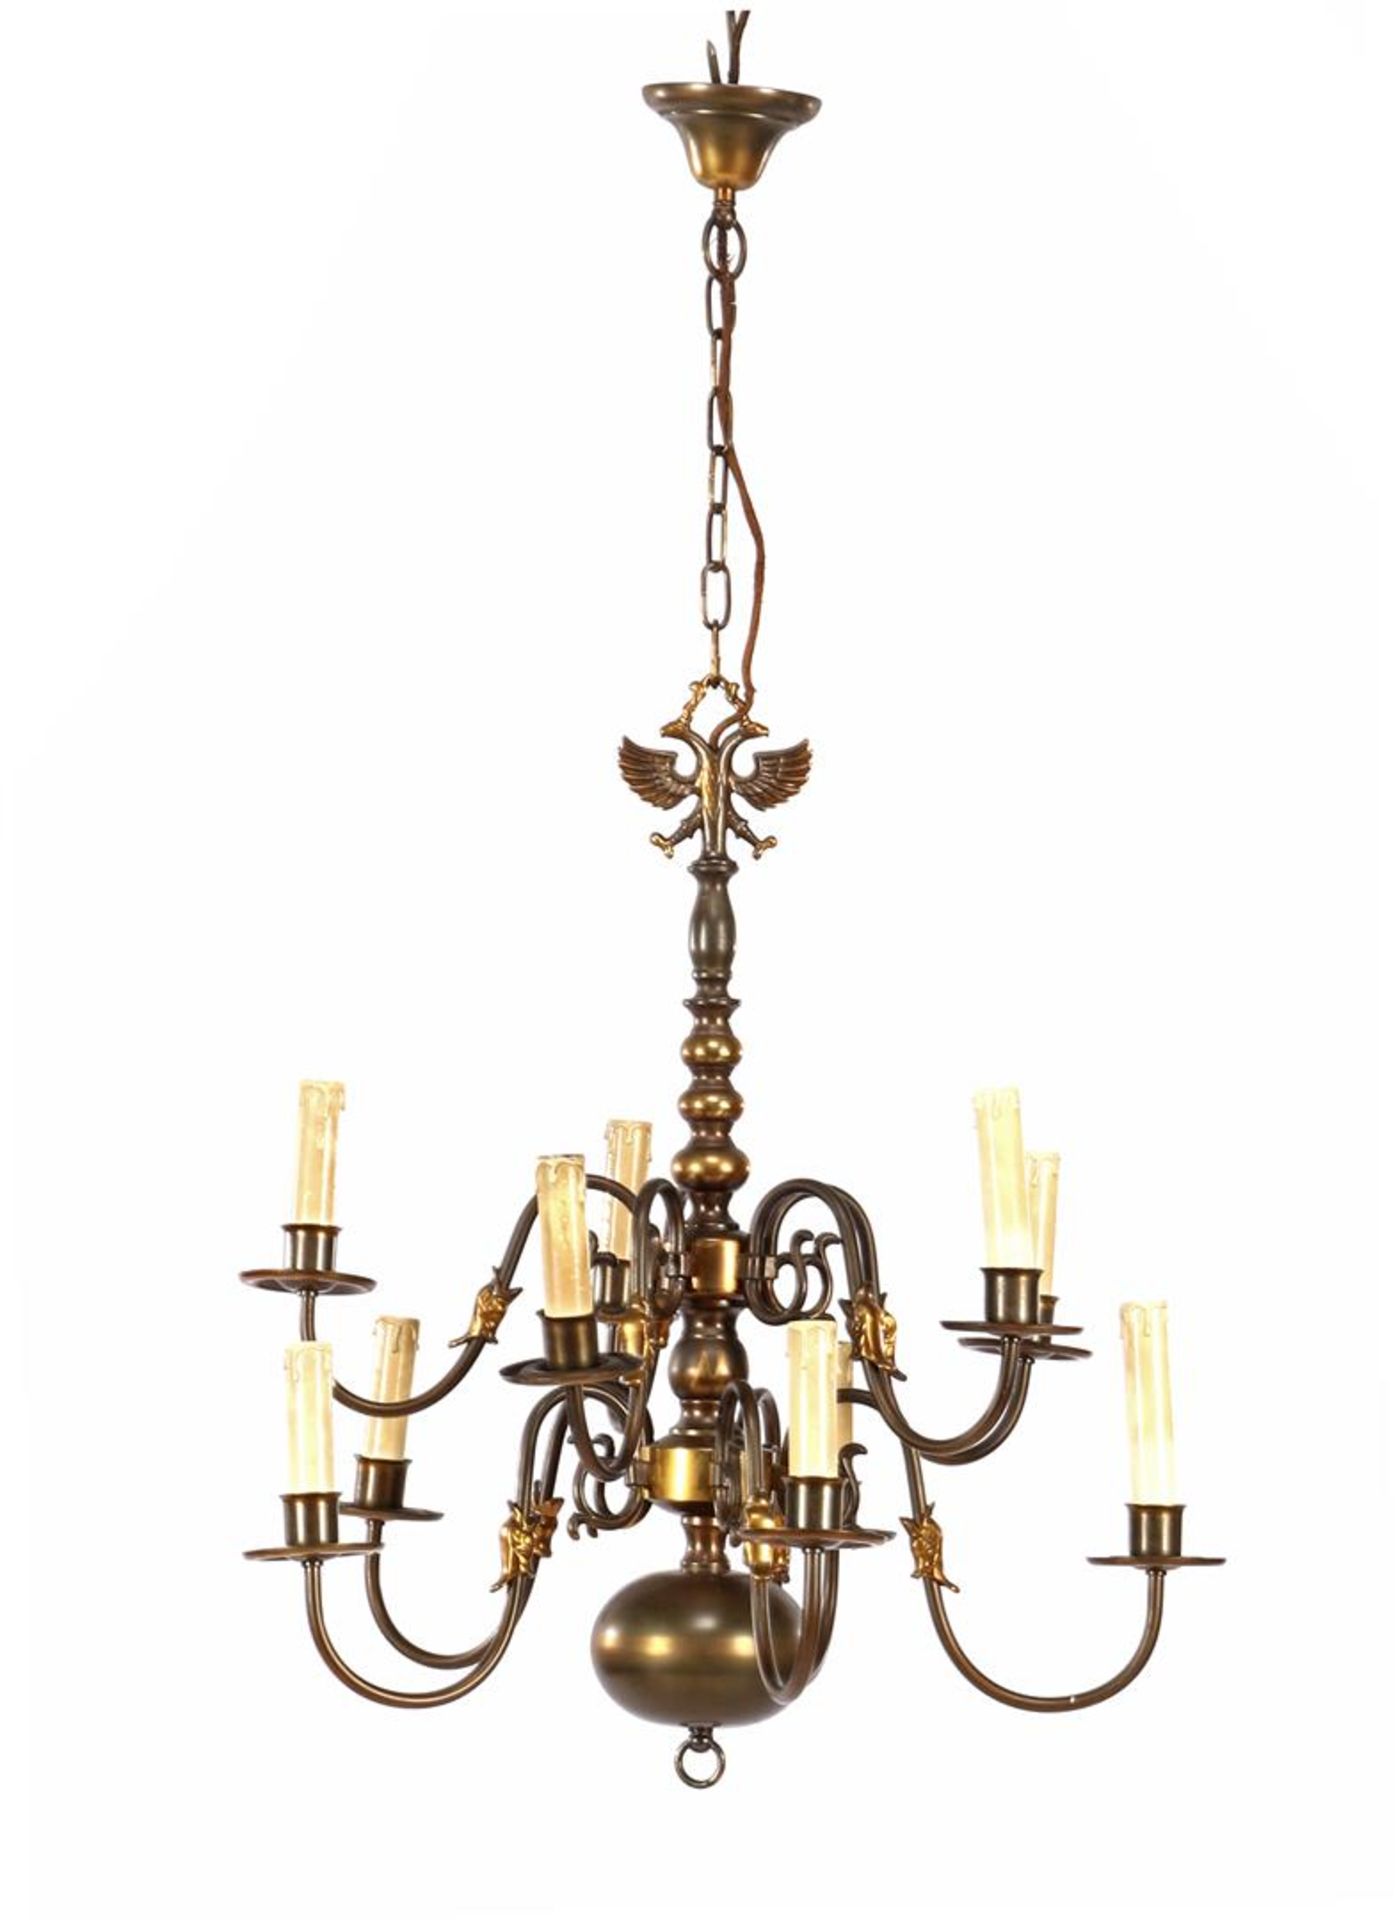 Copper 10-light double chandelier